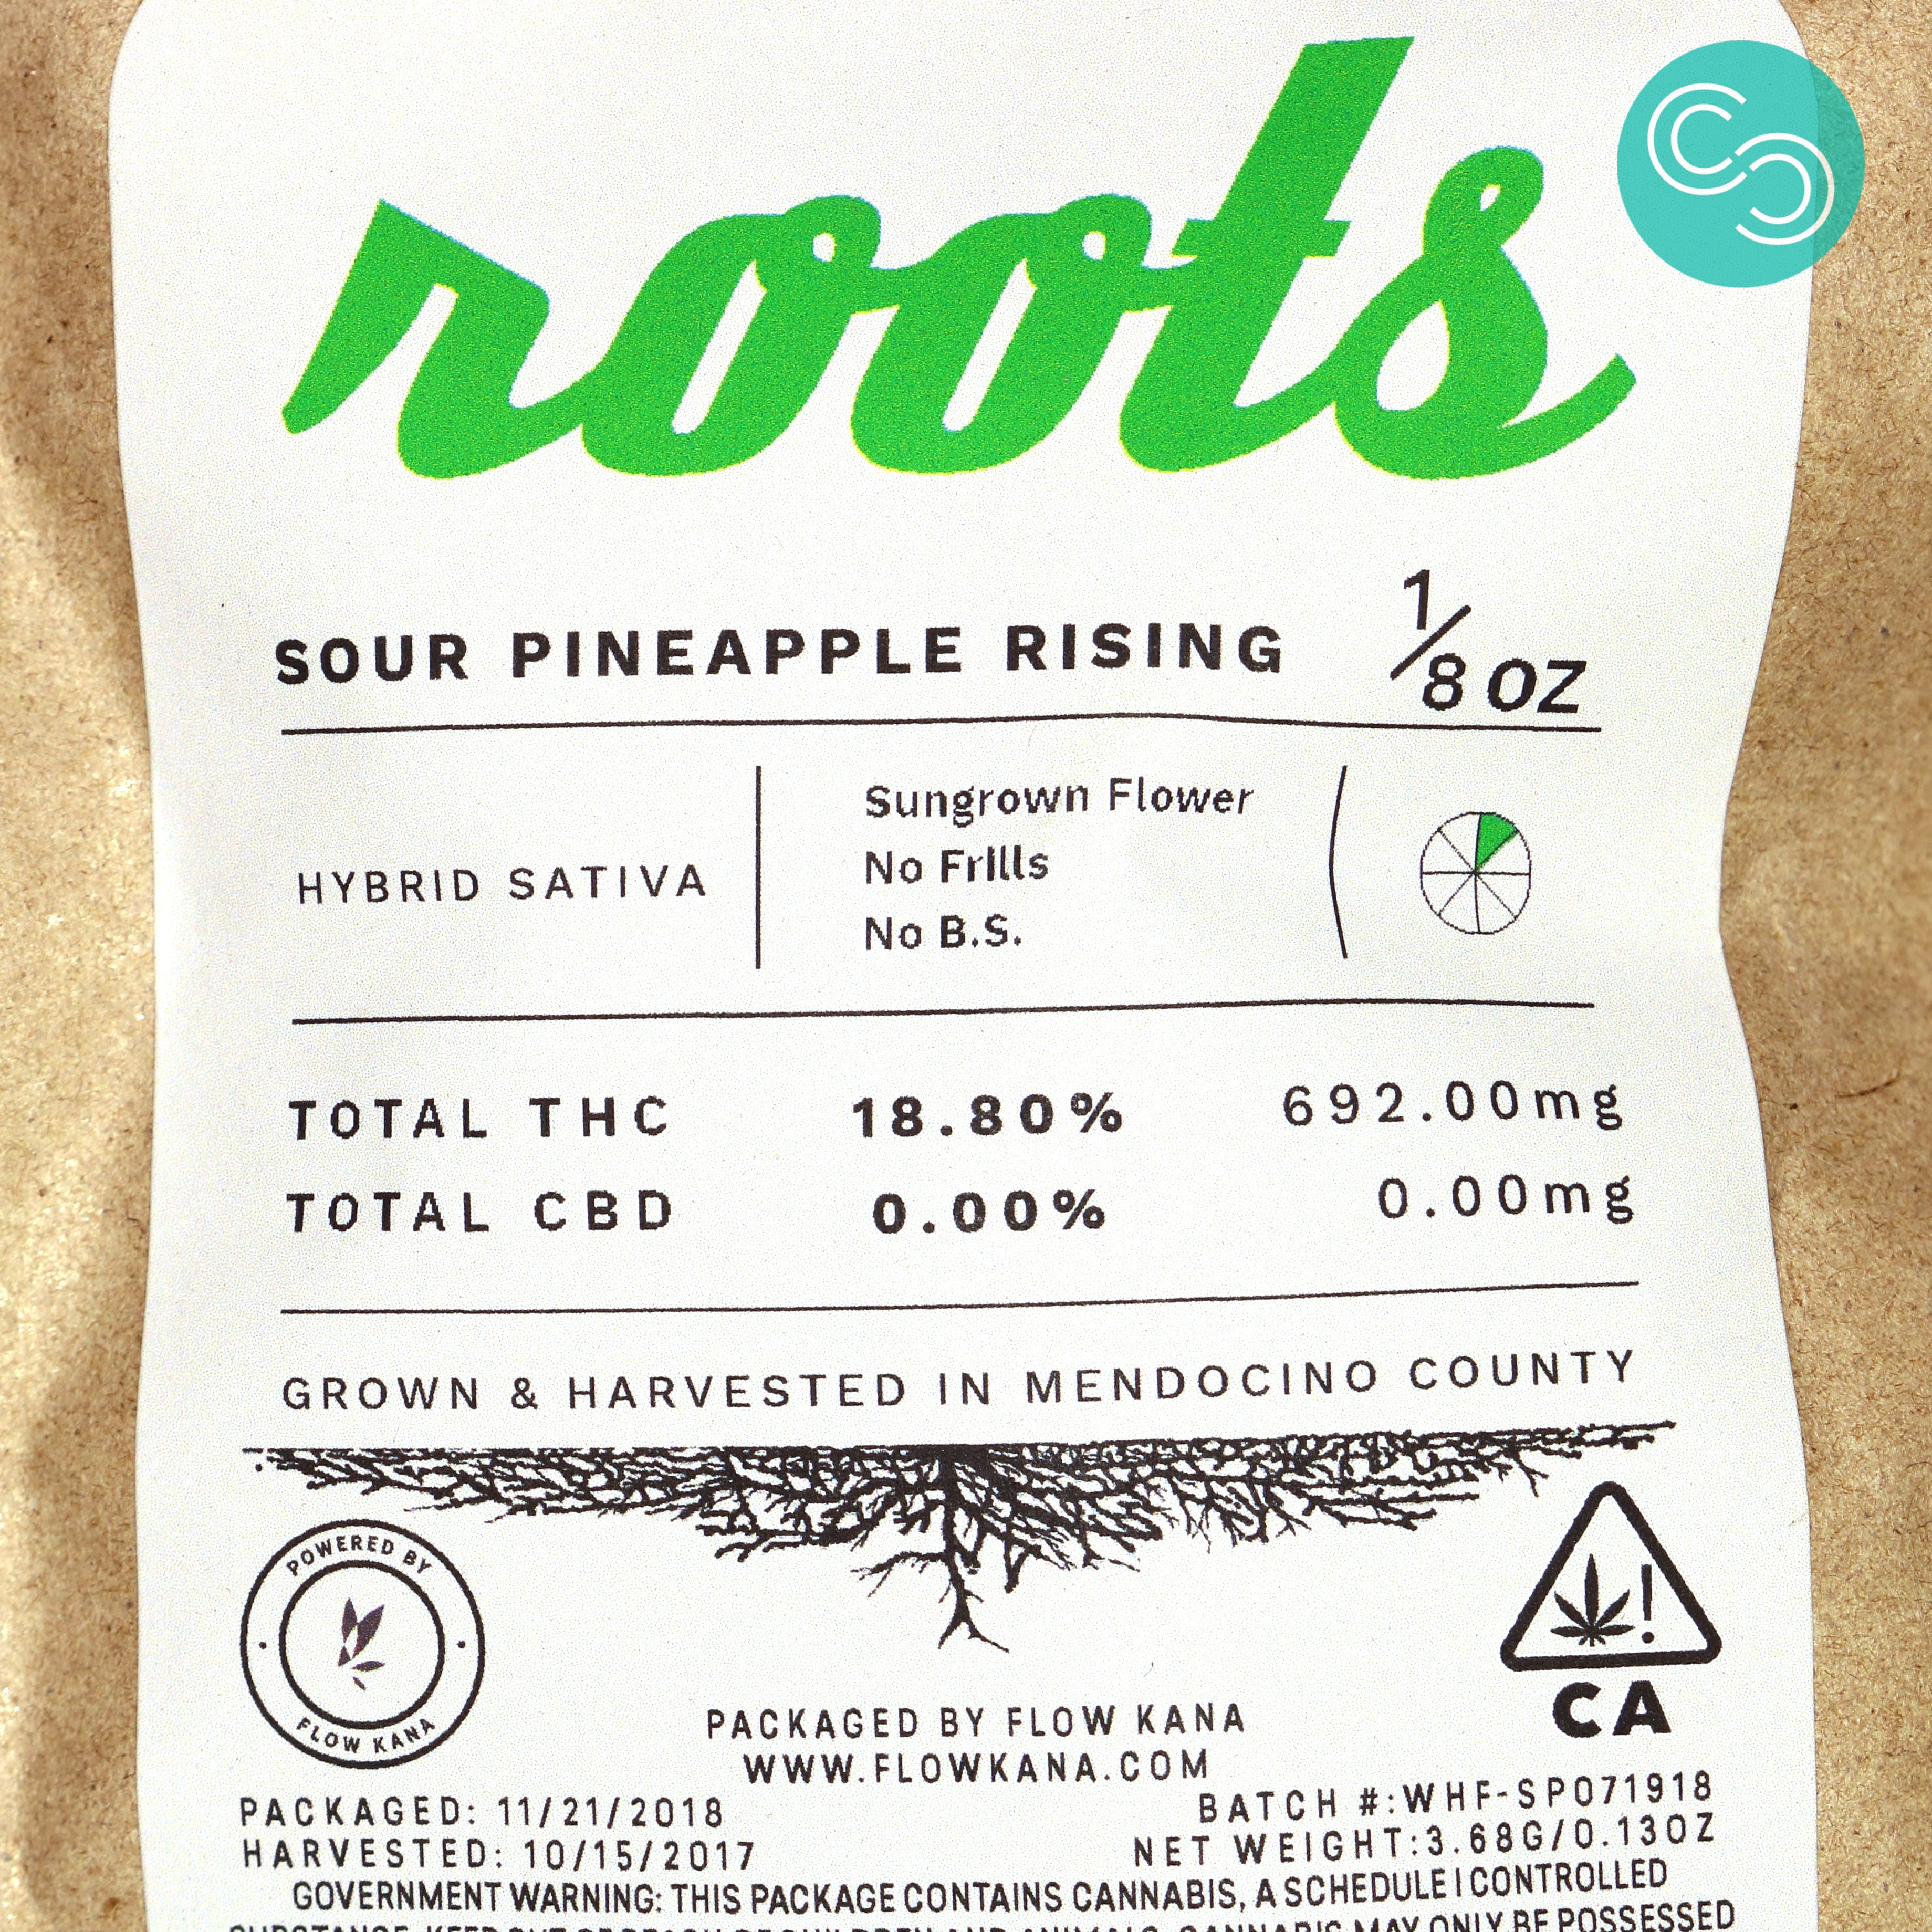 marijuana-dispensaries-114a-otto-circle-sacramento-roots-sour-pineapple-rising-18-8-25-thc